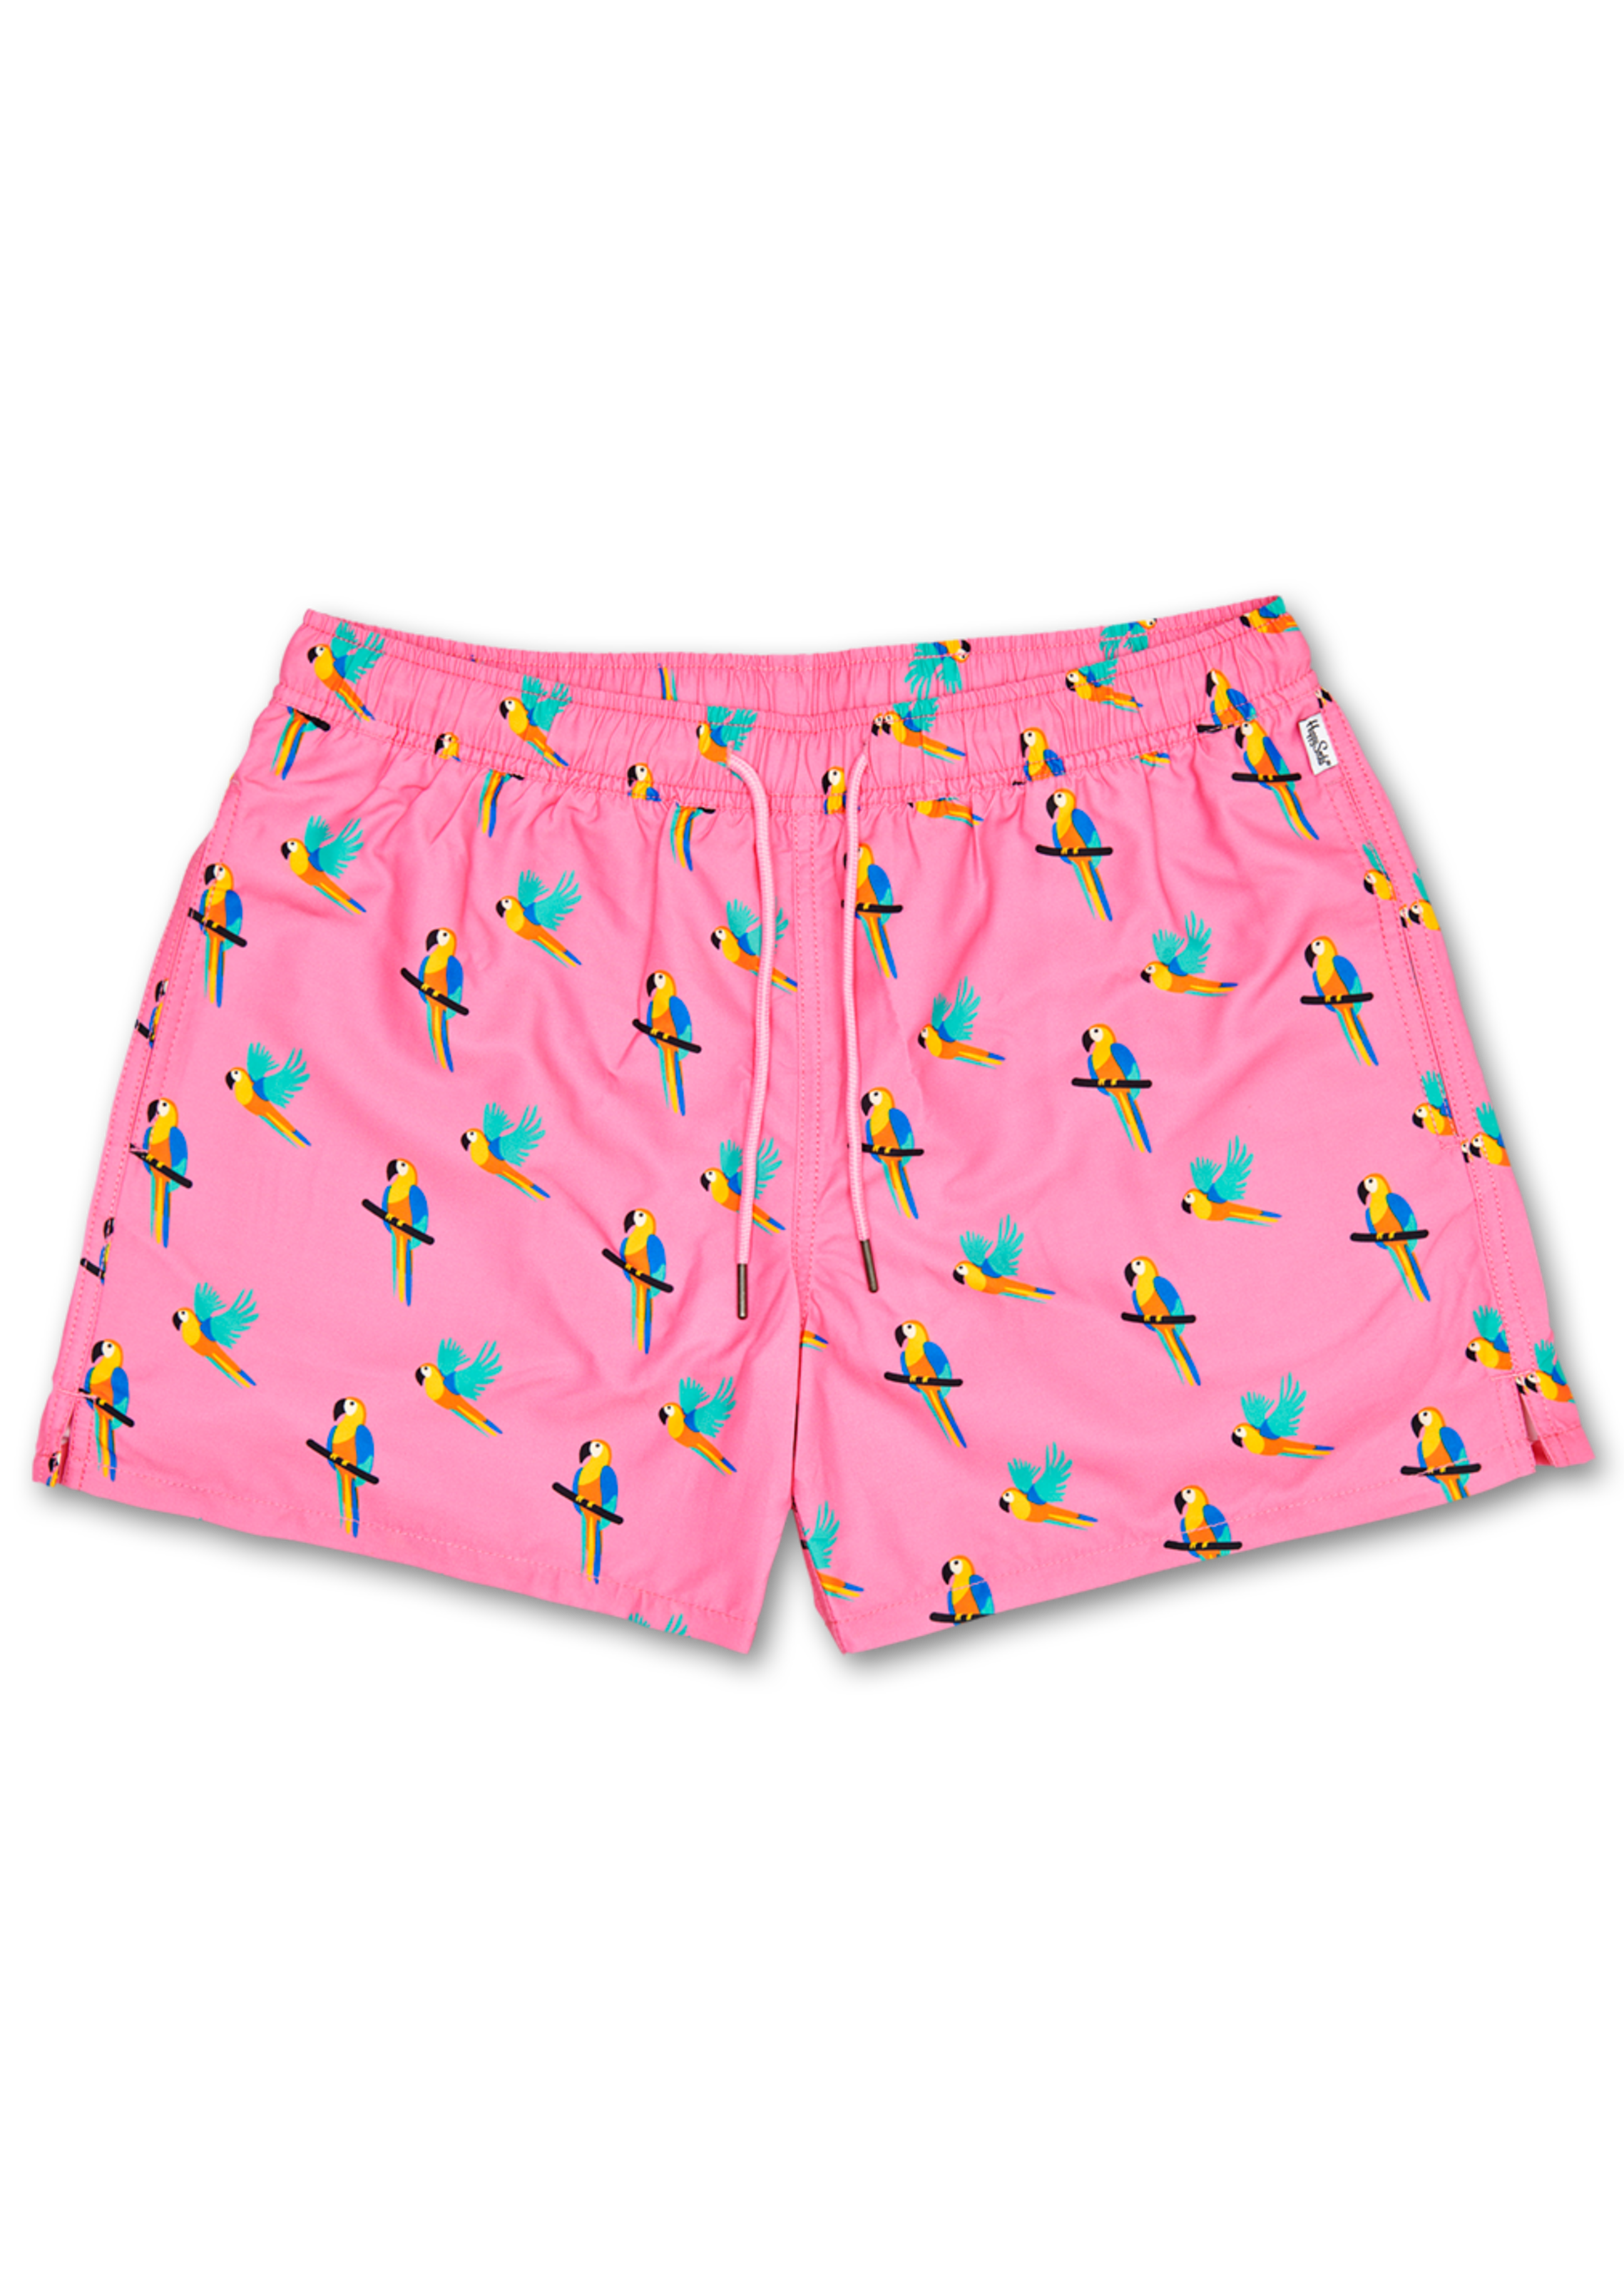 Men’s swim shorts: Parrot pattern | Happy Socks